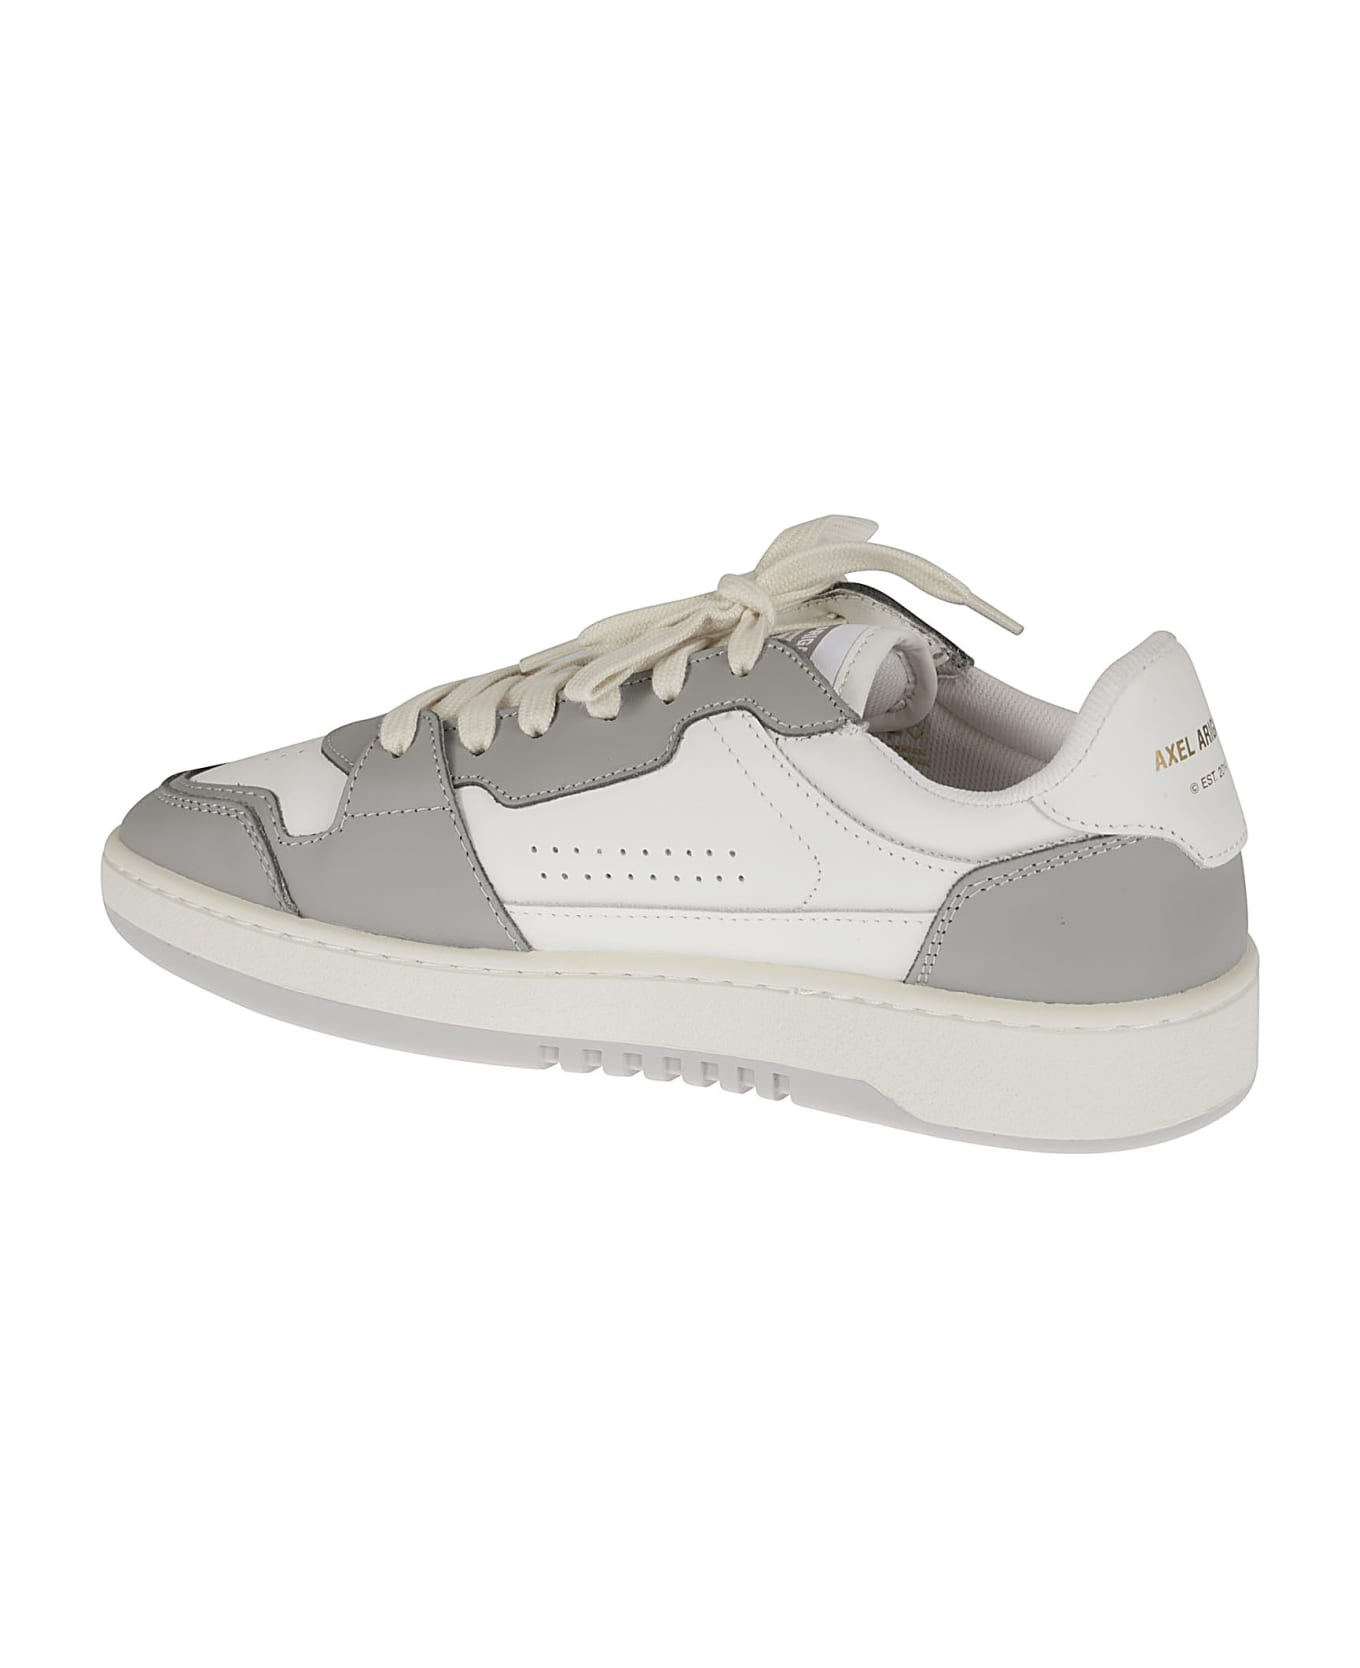 Axel Arigato Dice Lo Sneakers - White/Grey